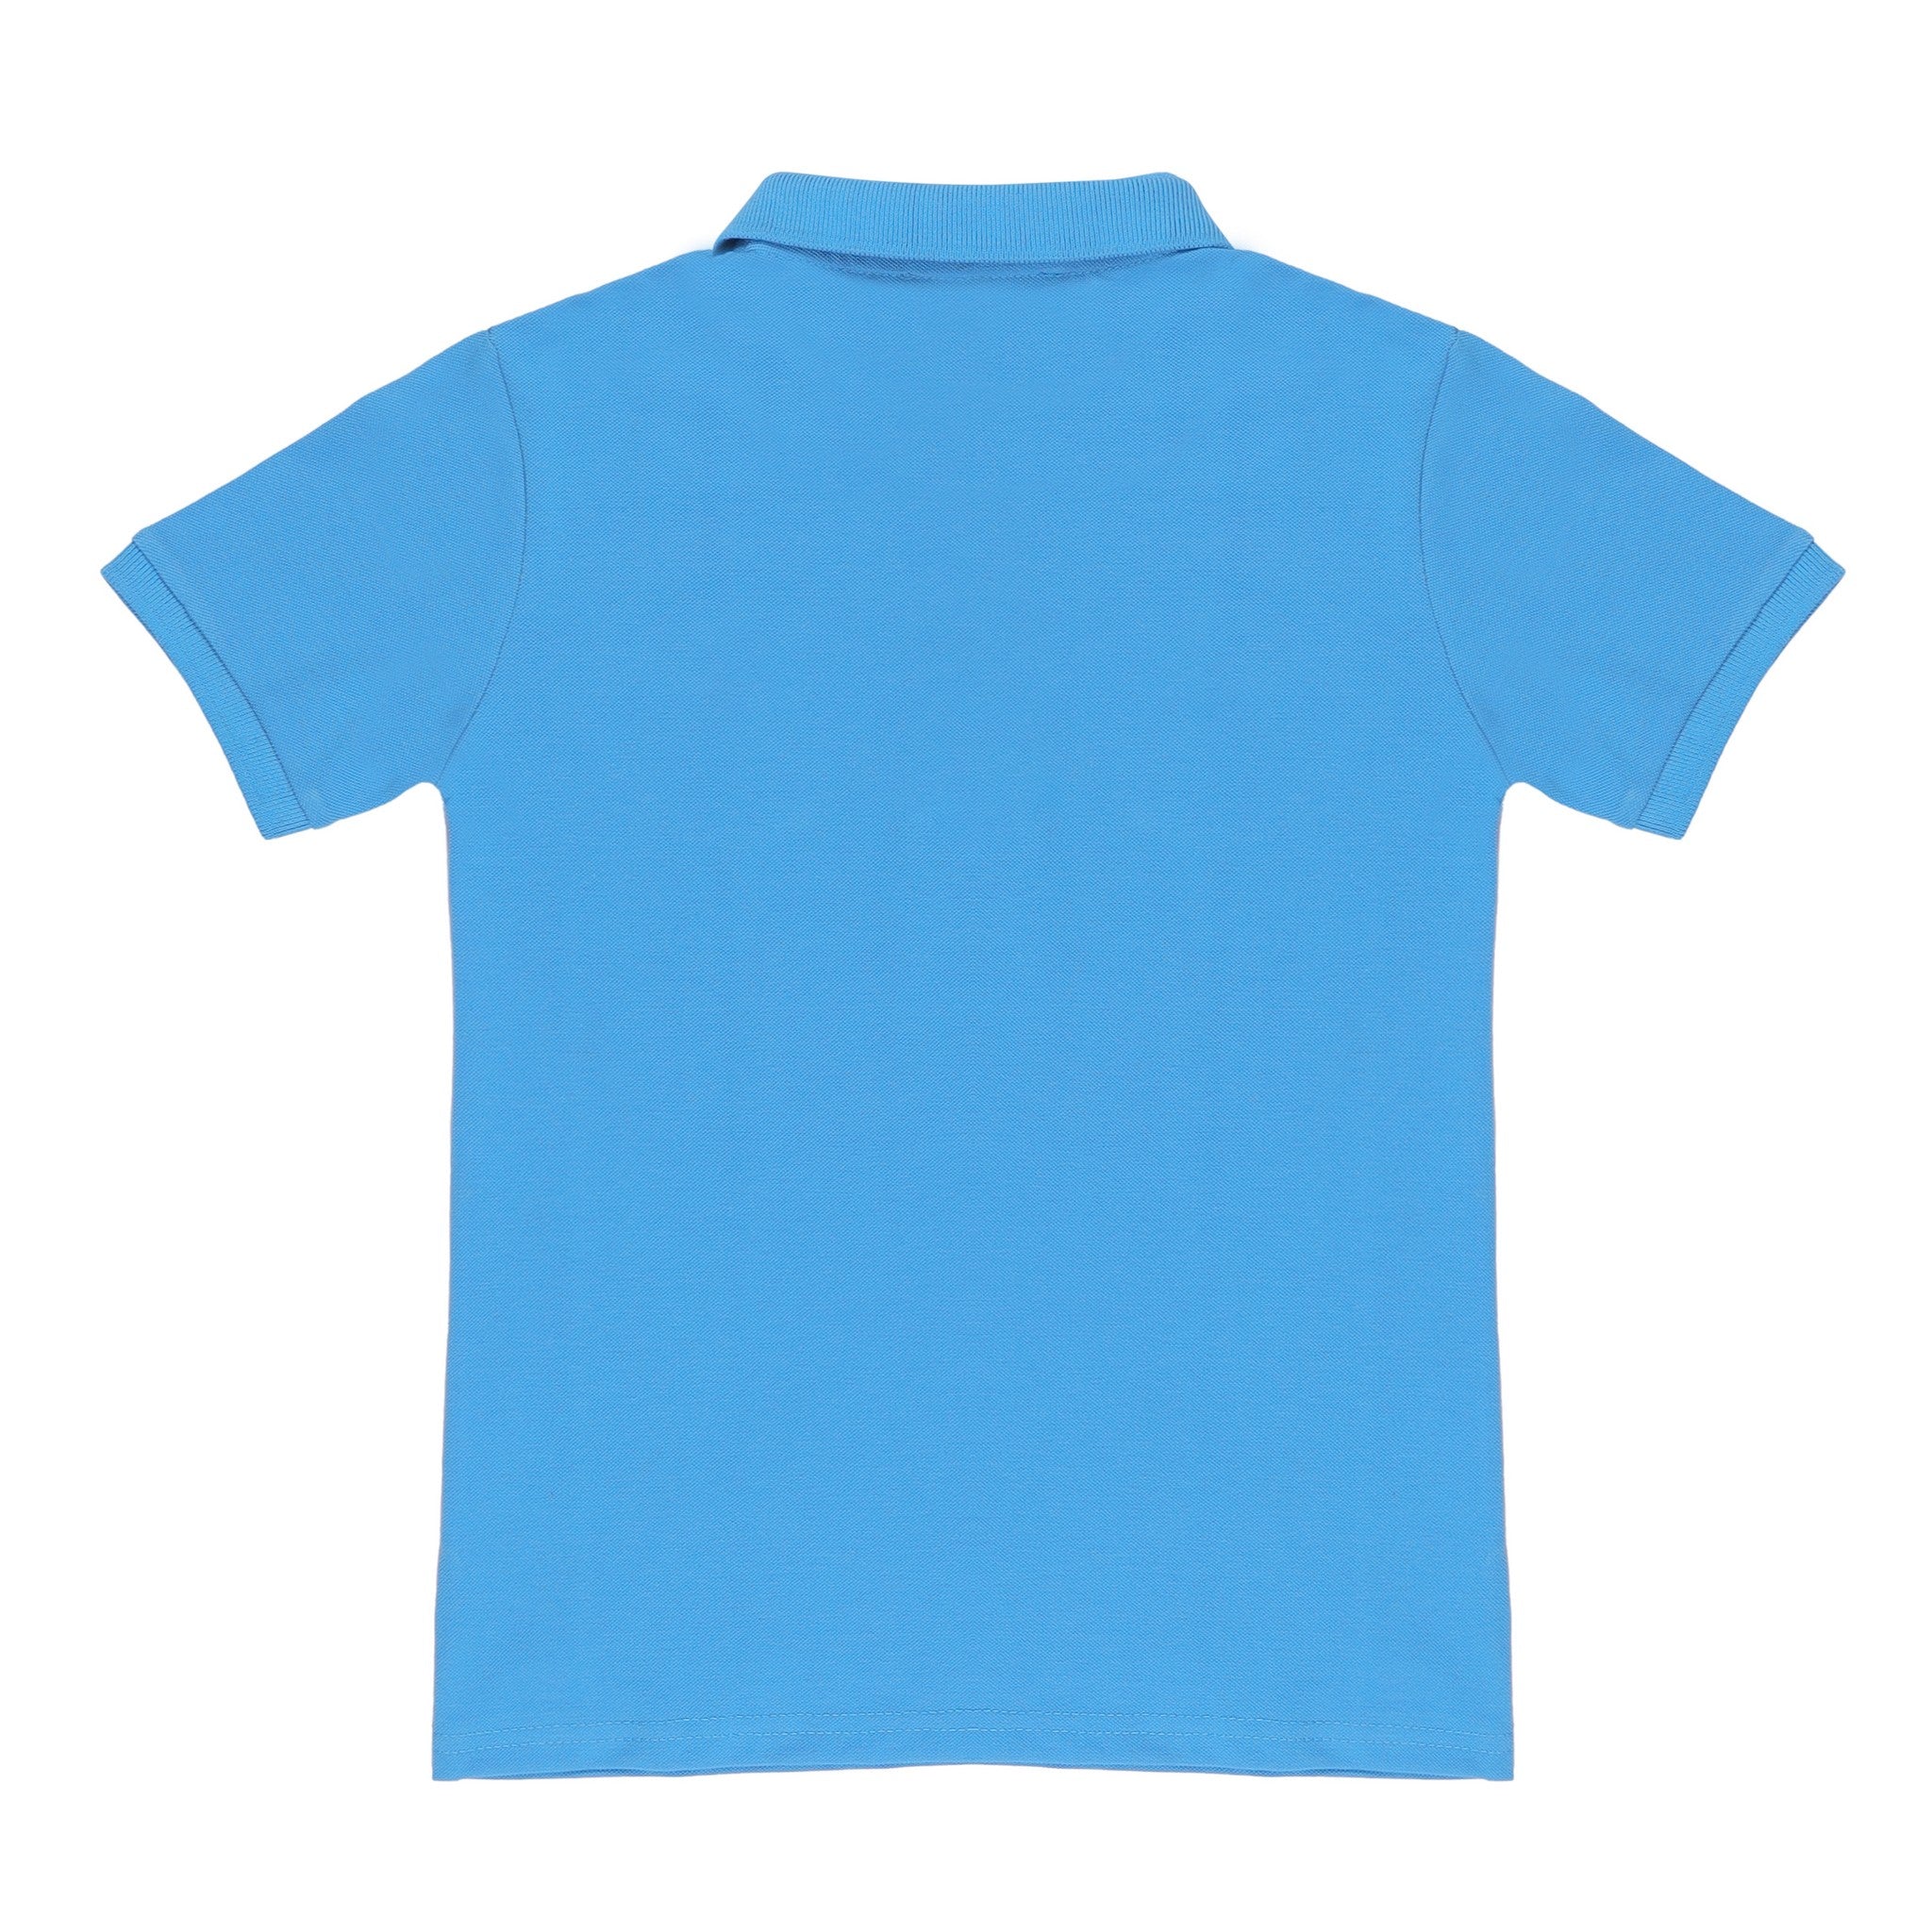 Rfa Blue Polo Shirt